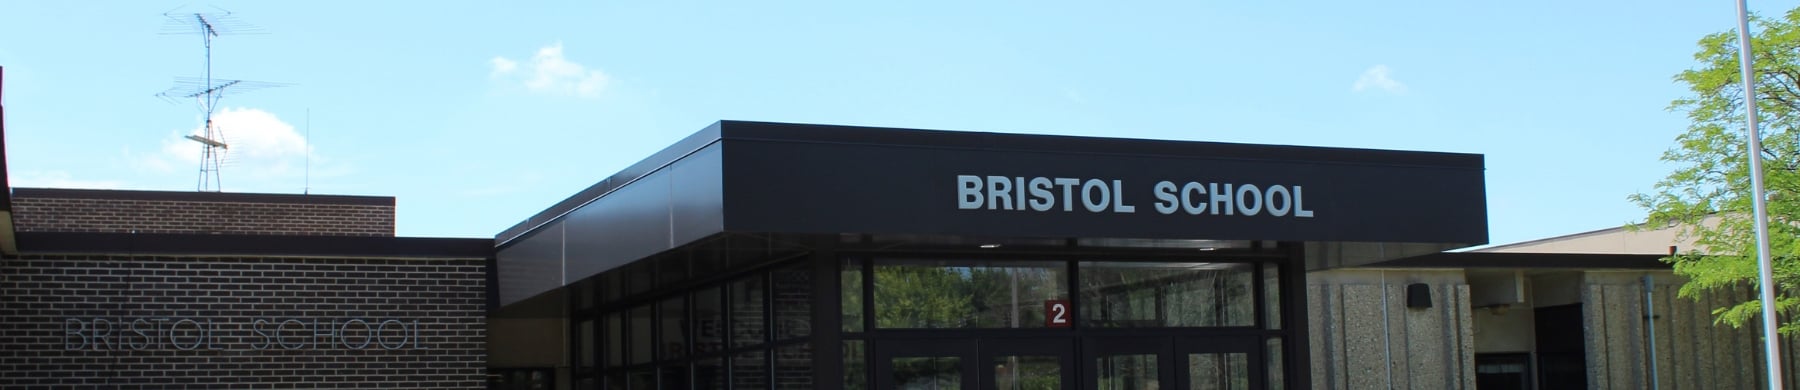 Bristol School